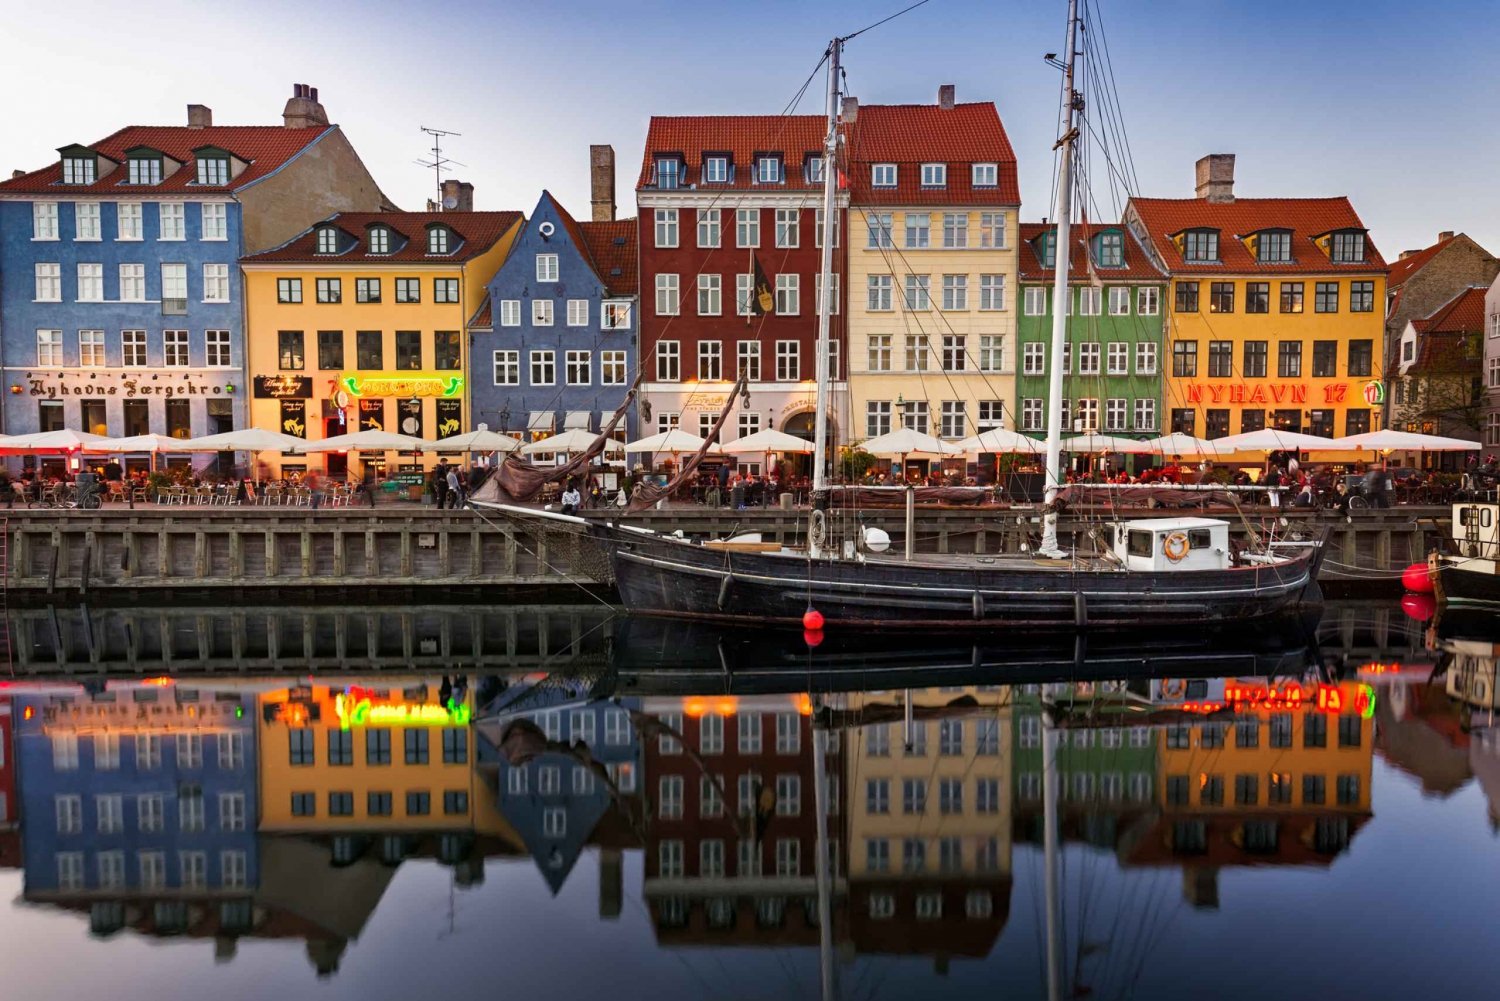 Copenhagen: 3-Hour City Tour with Rosenborg Castle Ticket